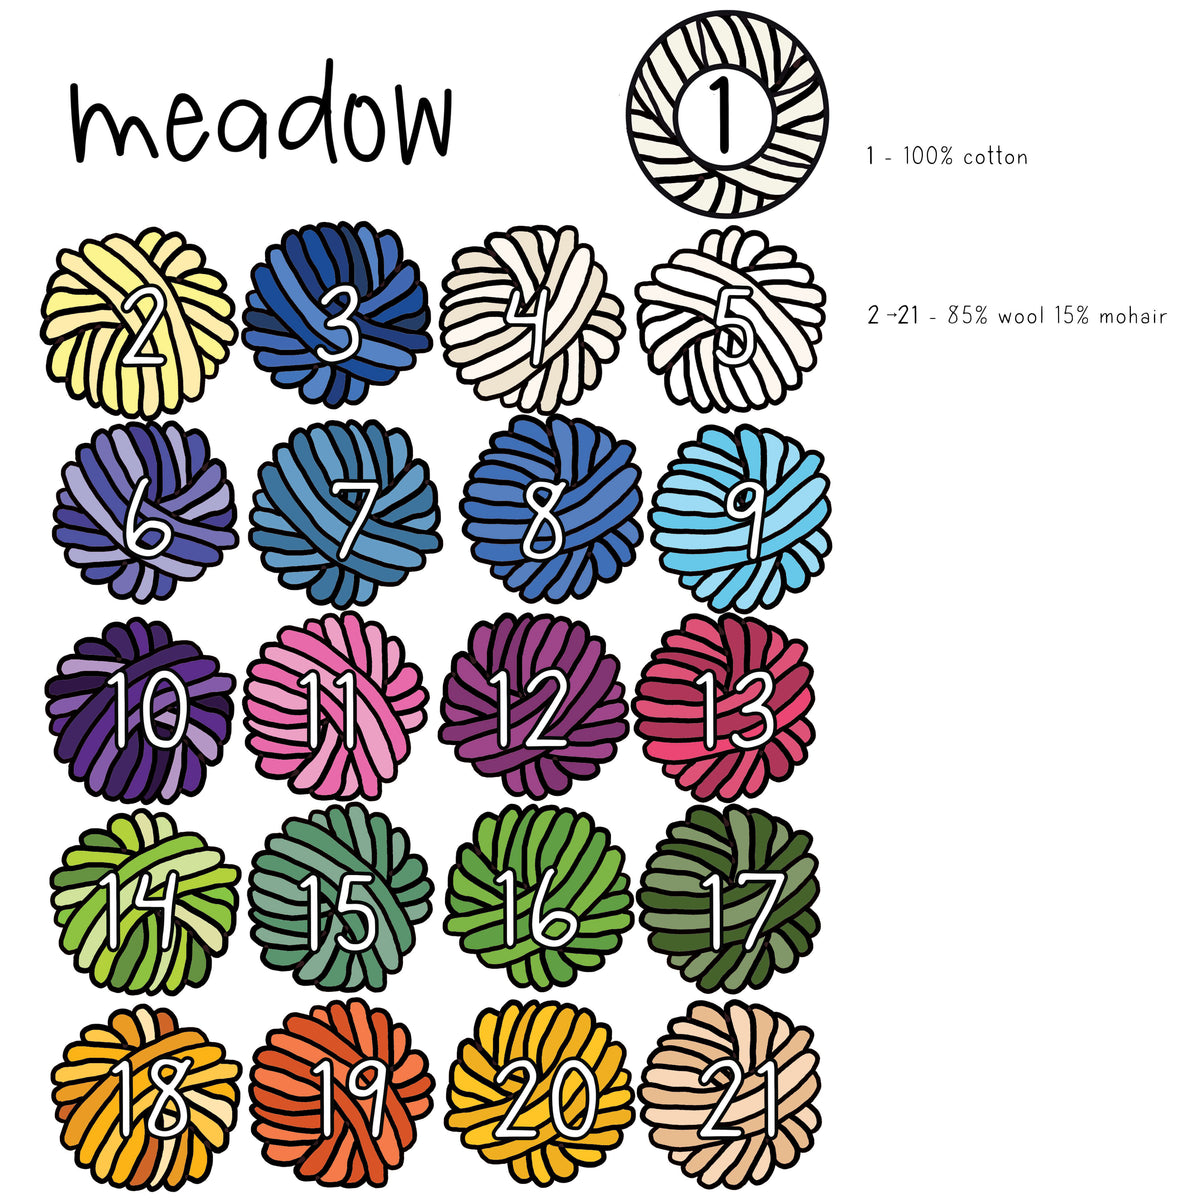 Weave the World - Meadows - Weaving Kit